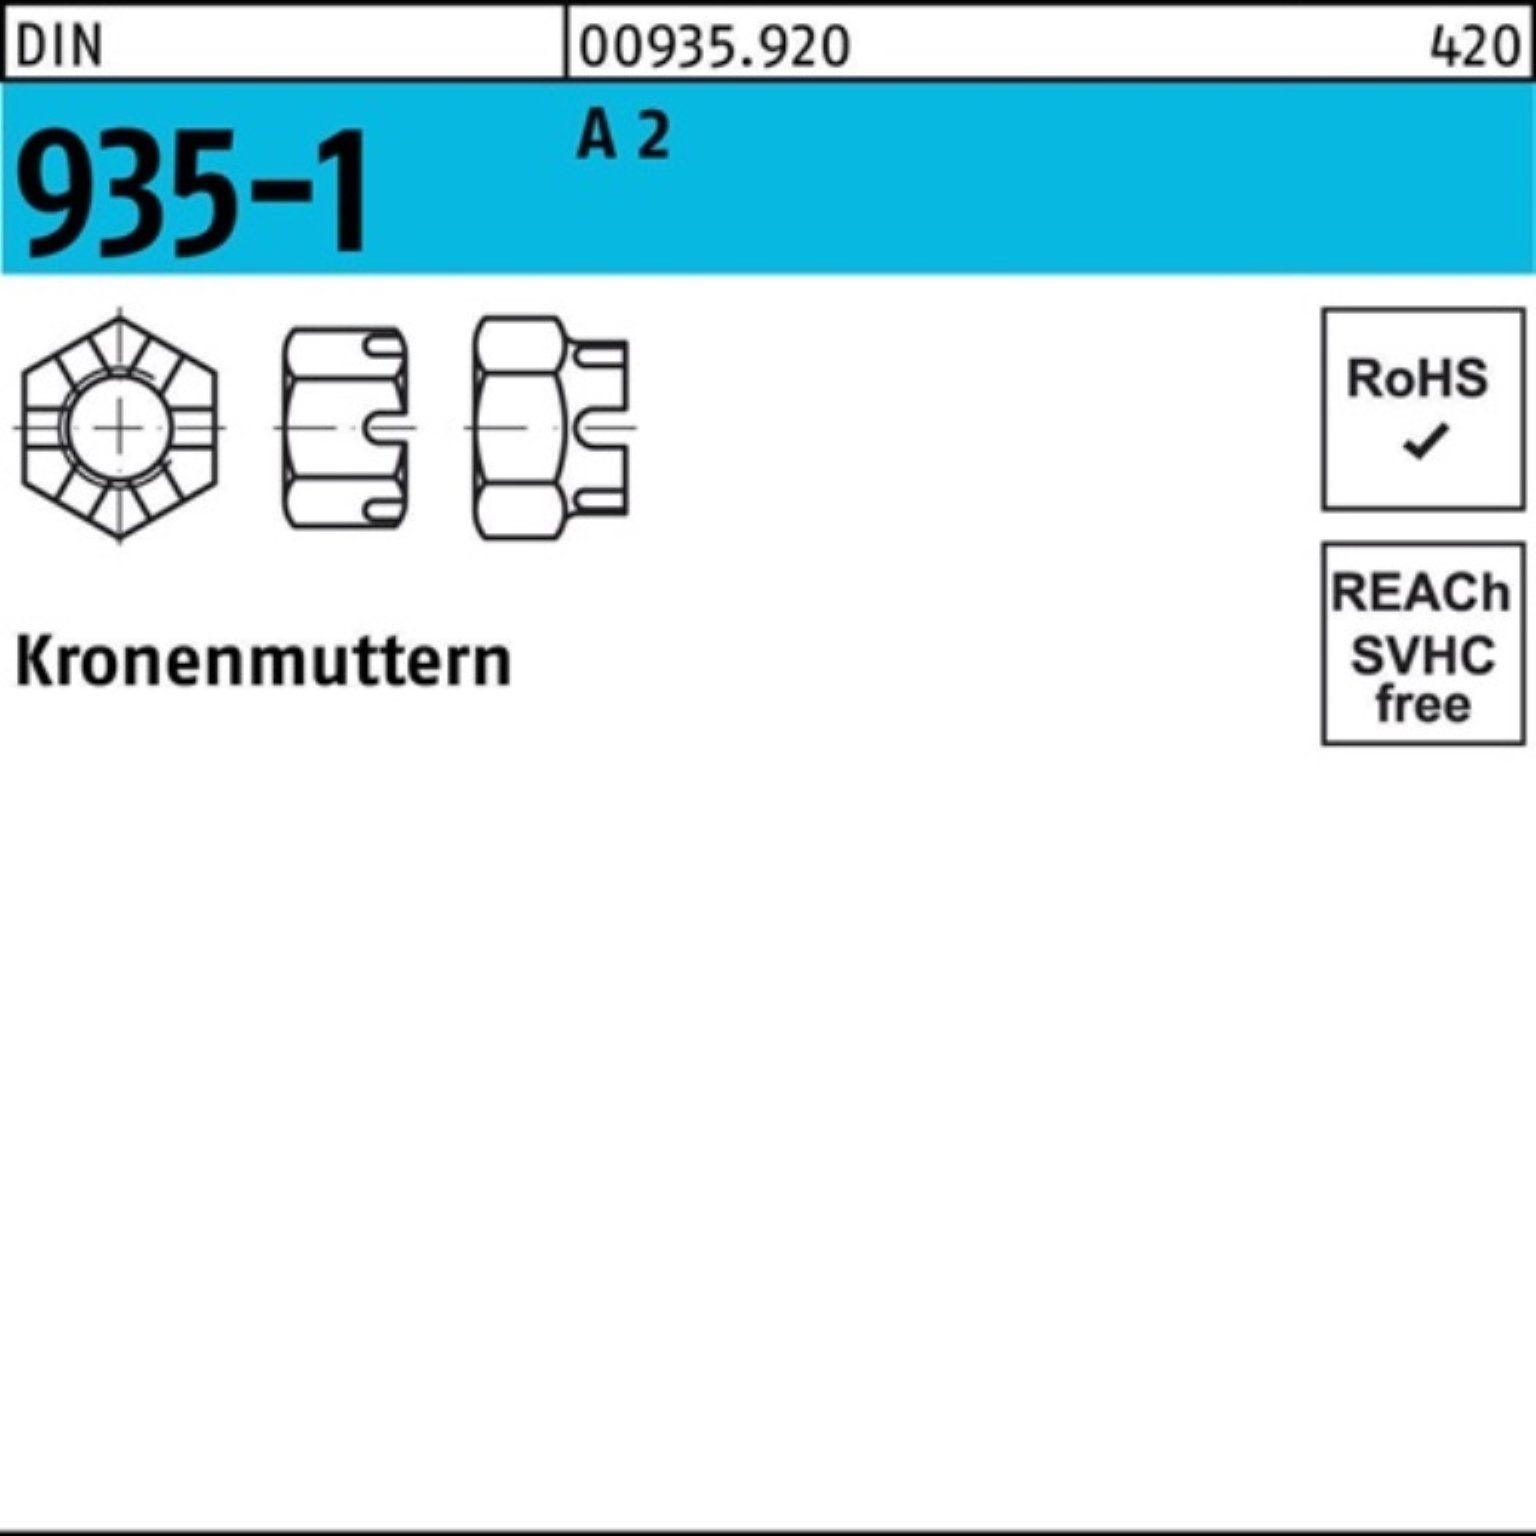 DIN Kronenmutter Kronenmutter 2 935-1 A Krone Stück Reyher DIN Pack 25 A 2 935-1 100er M8